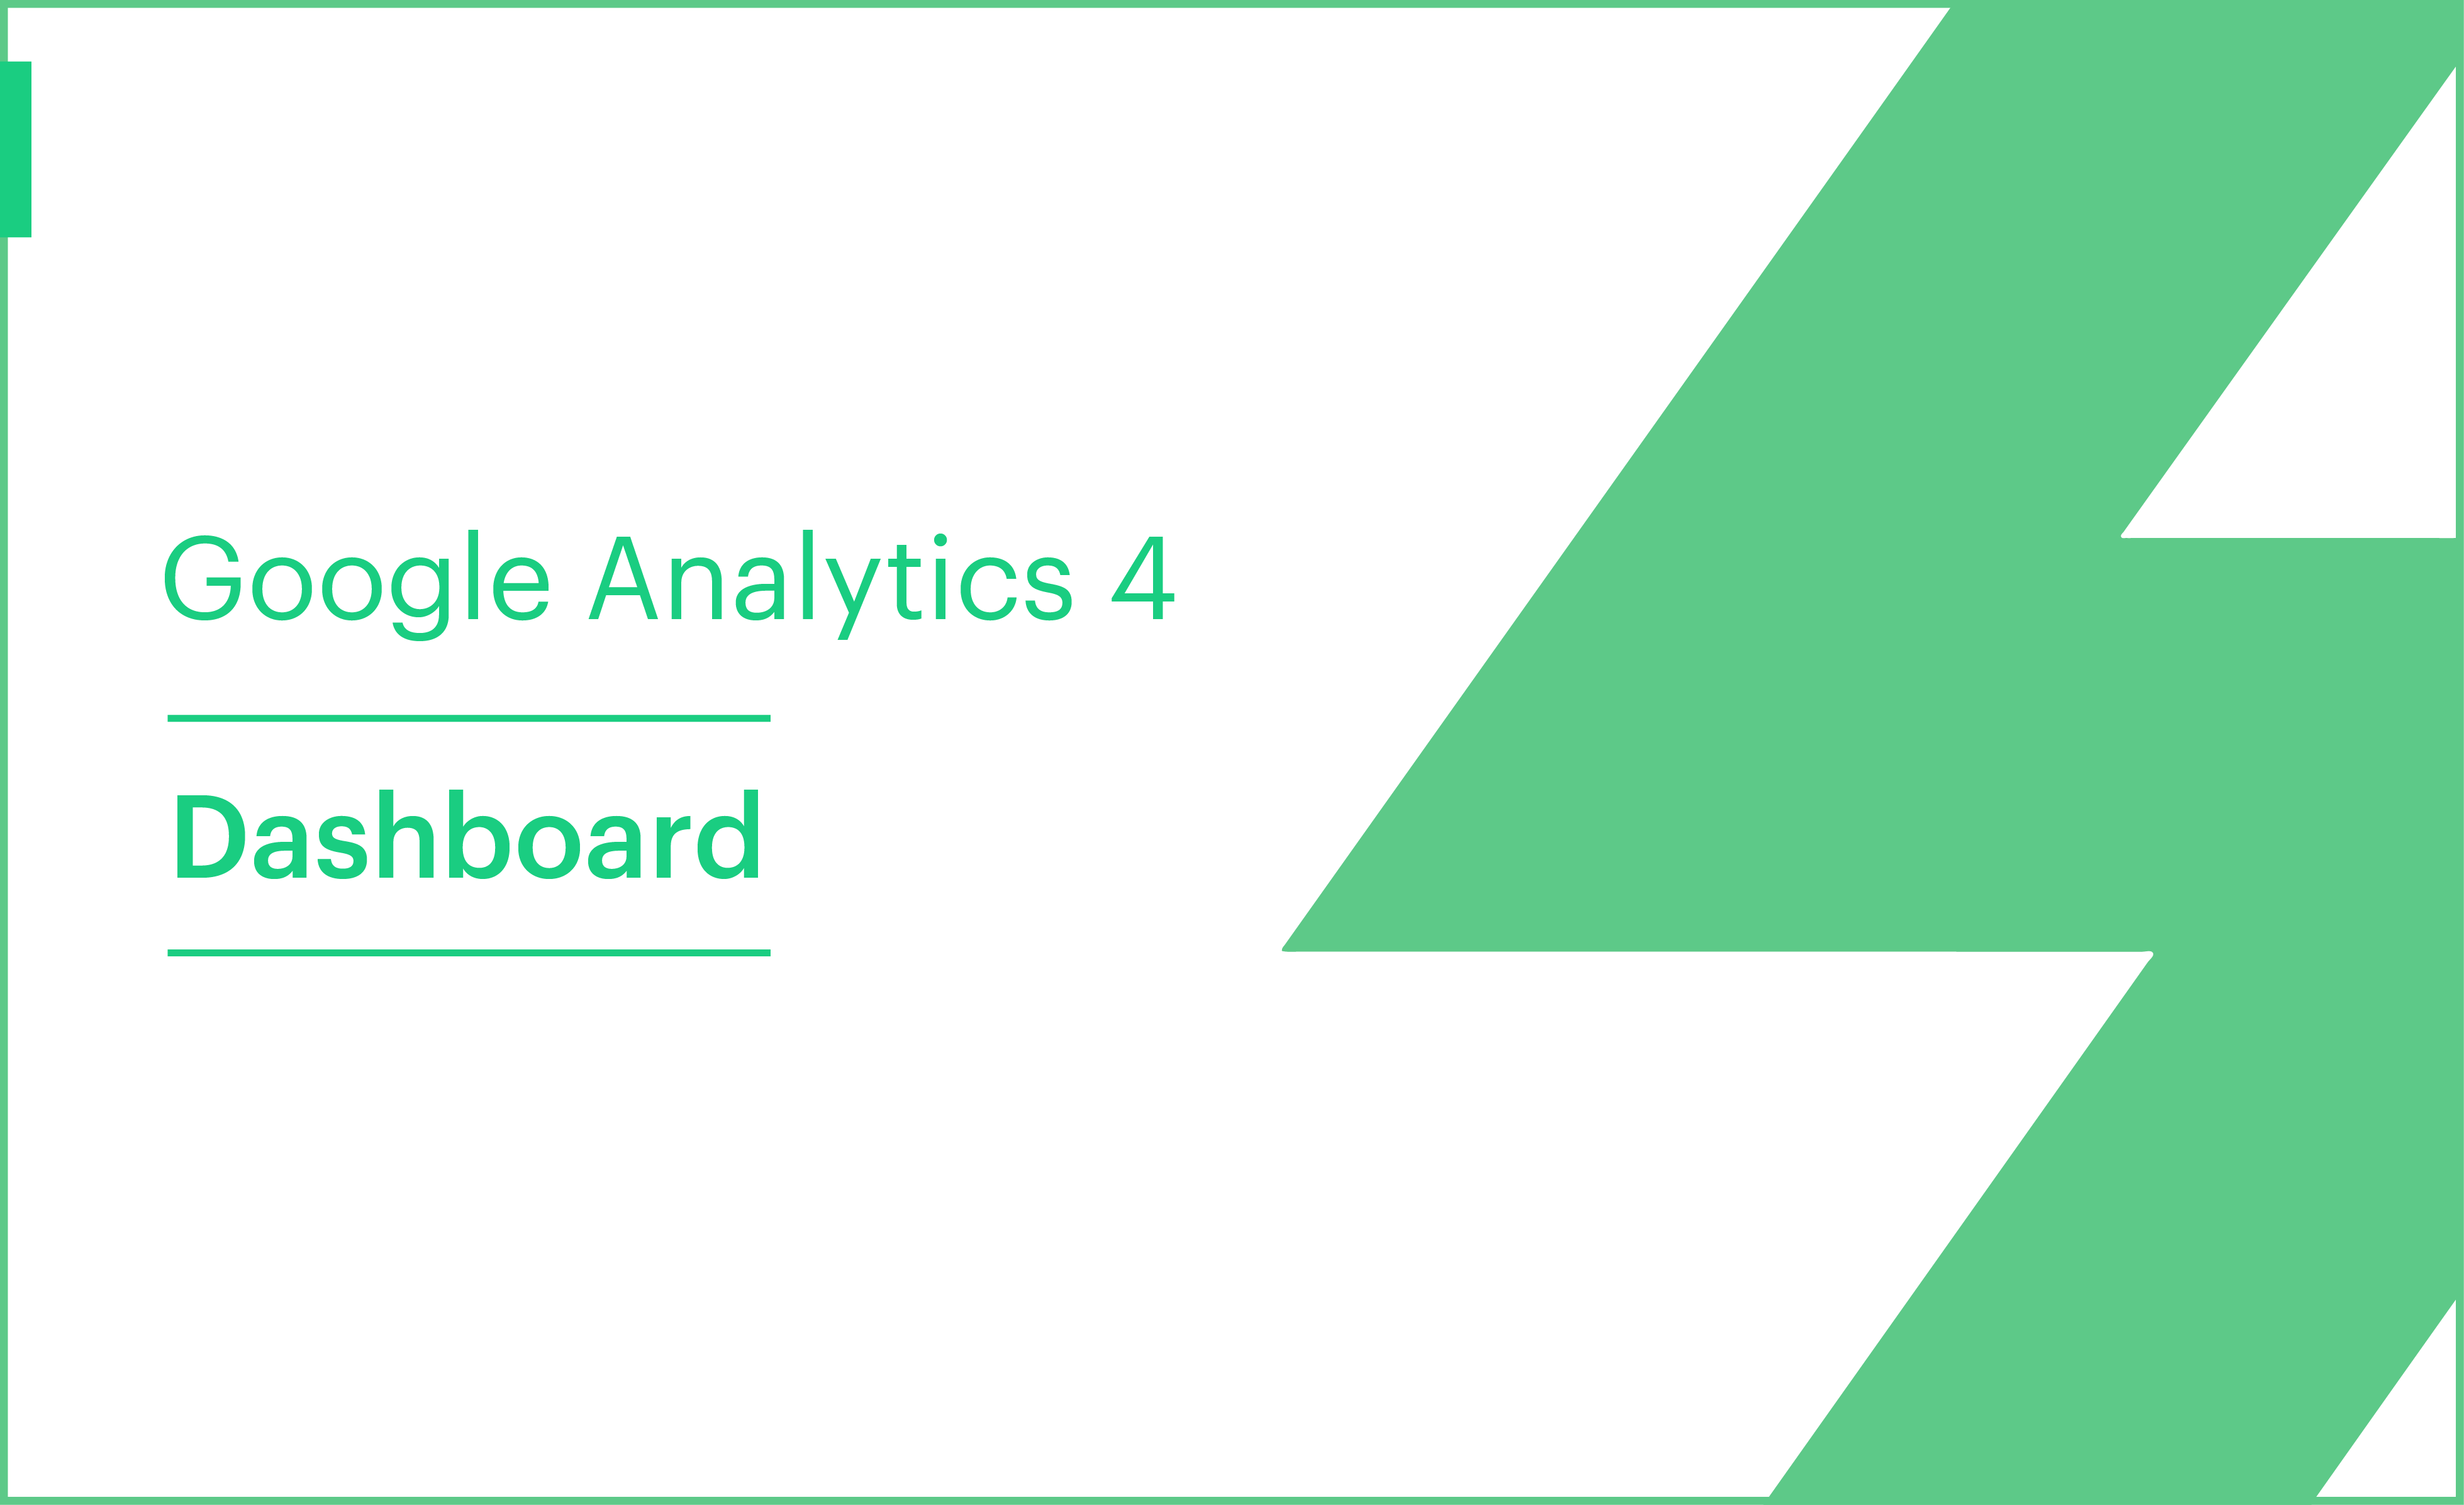 Google Analytics 4 Dashboard Report Template